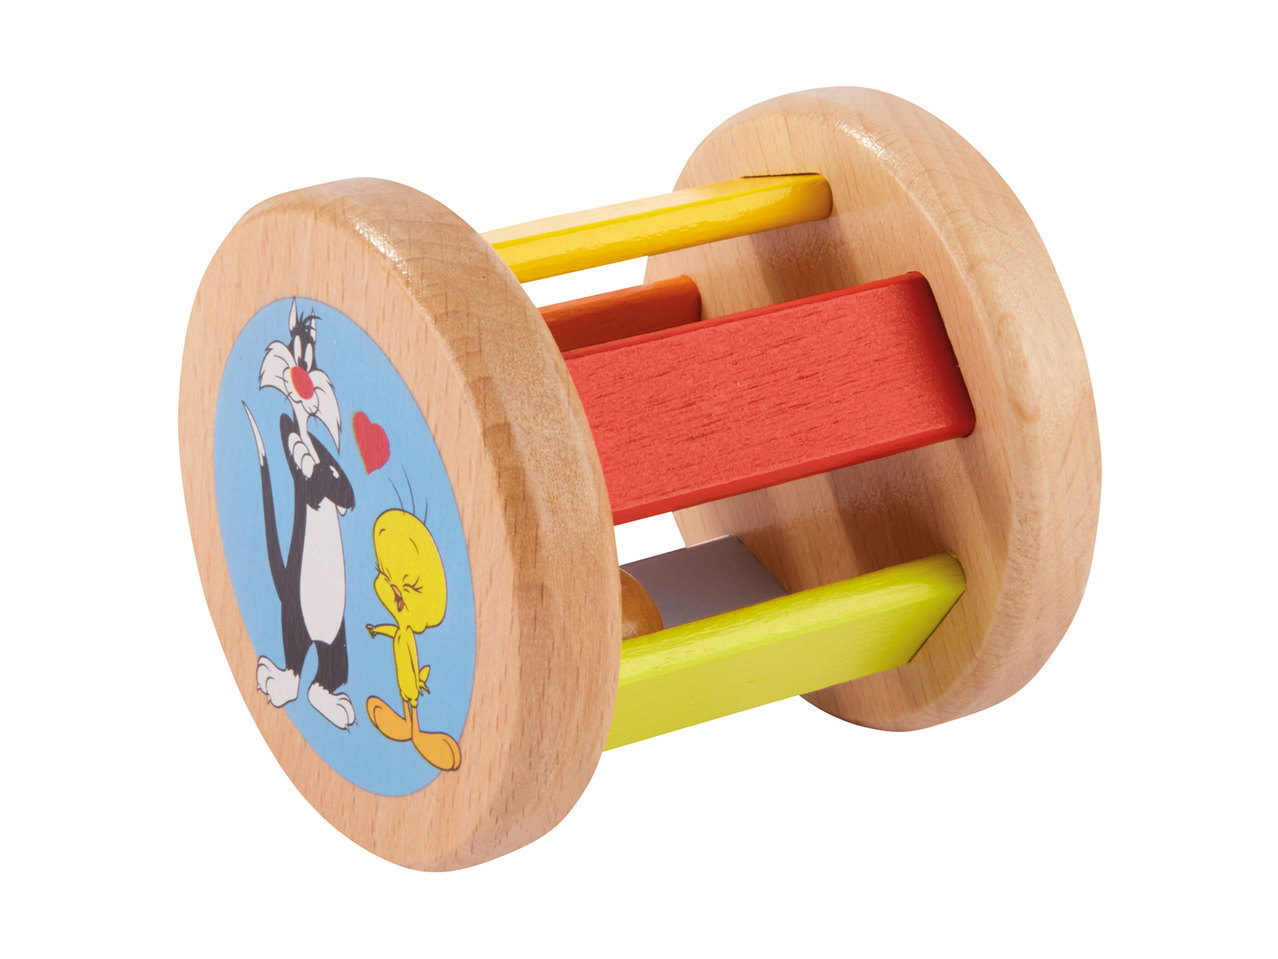 Playtive Junior Wooden Toys1